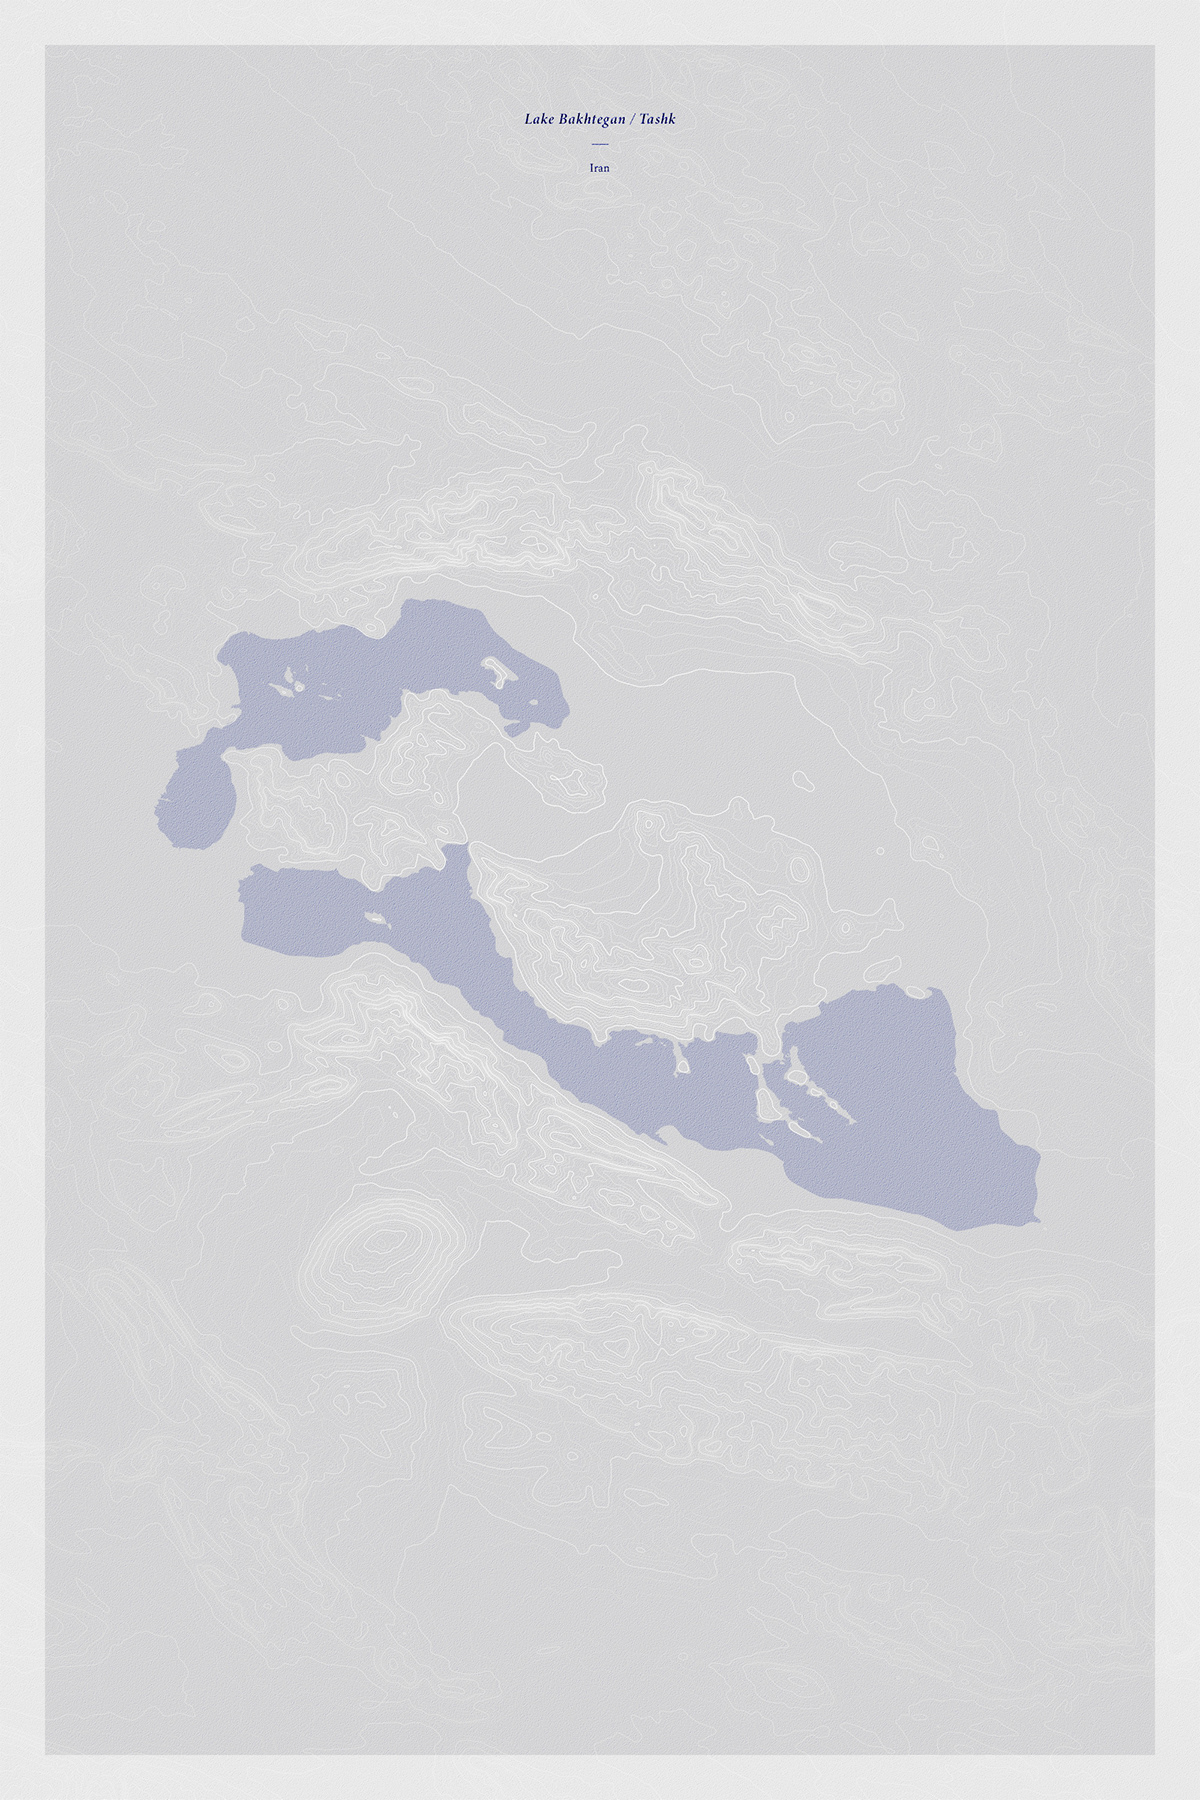 Cartographic map (data visualization) of lake Bakhtegan. Tools: Blender, Photoshop, Illustrator